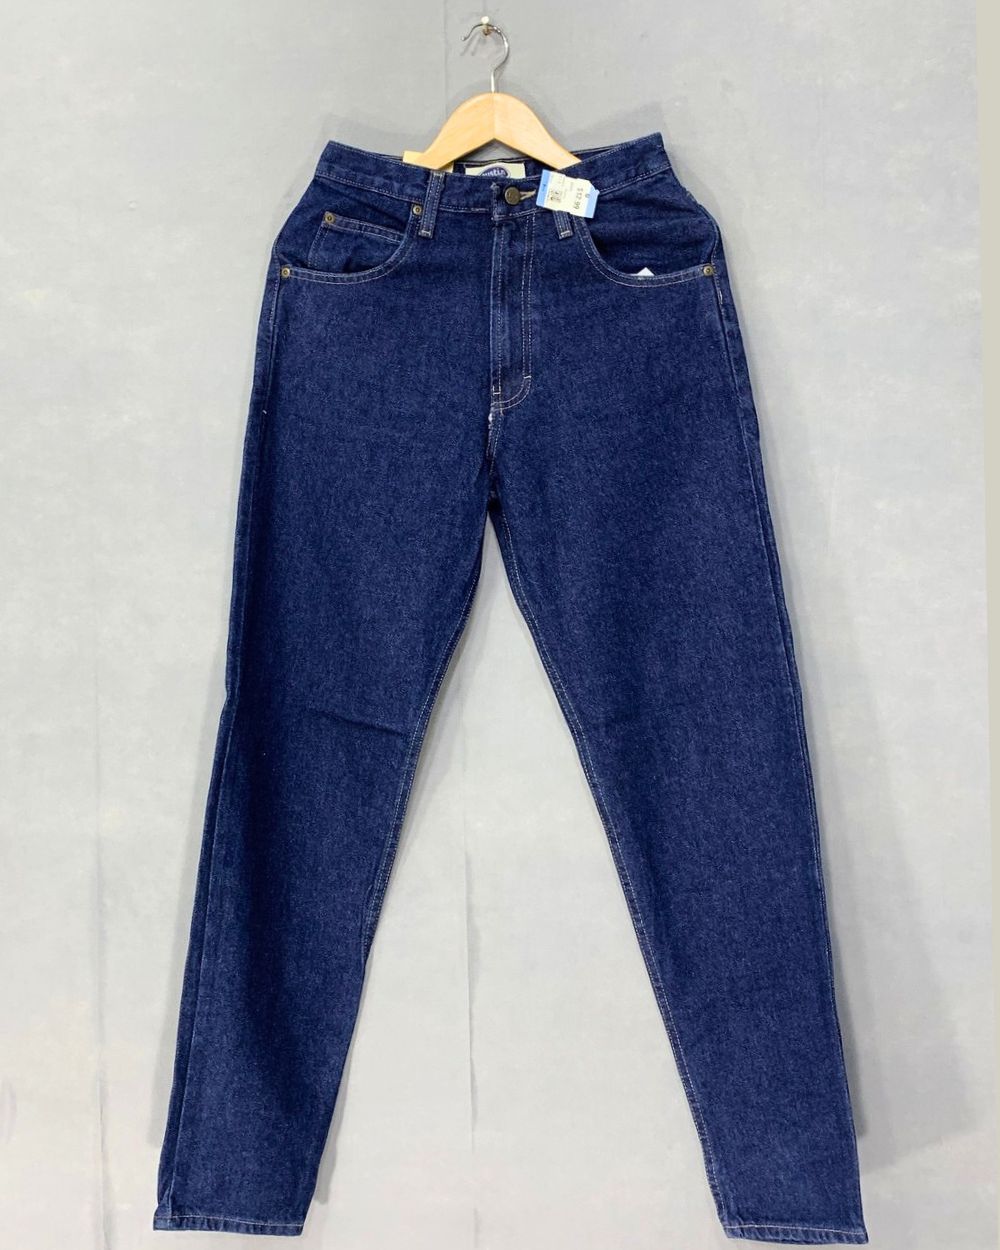 Austin Clothing Co Branded Original Jeans For Women Pant